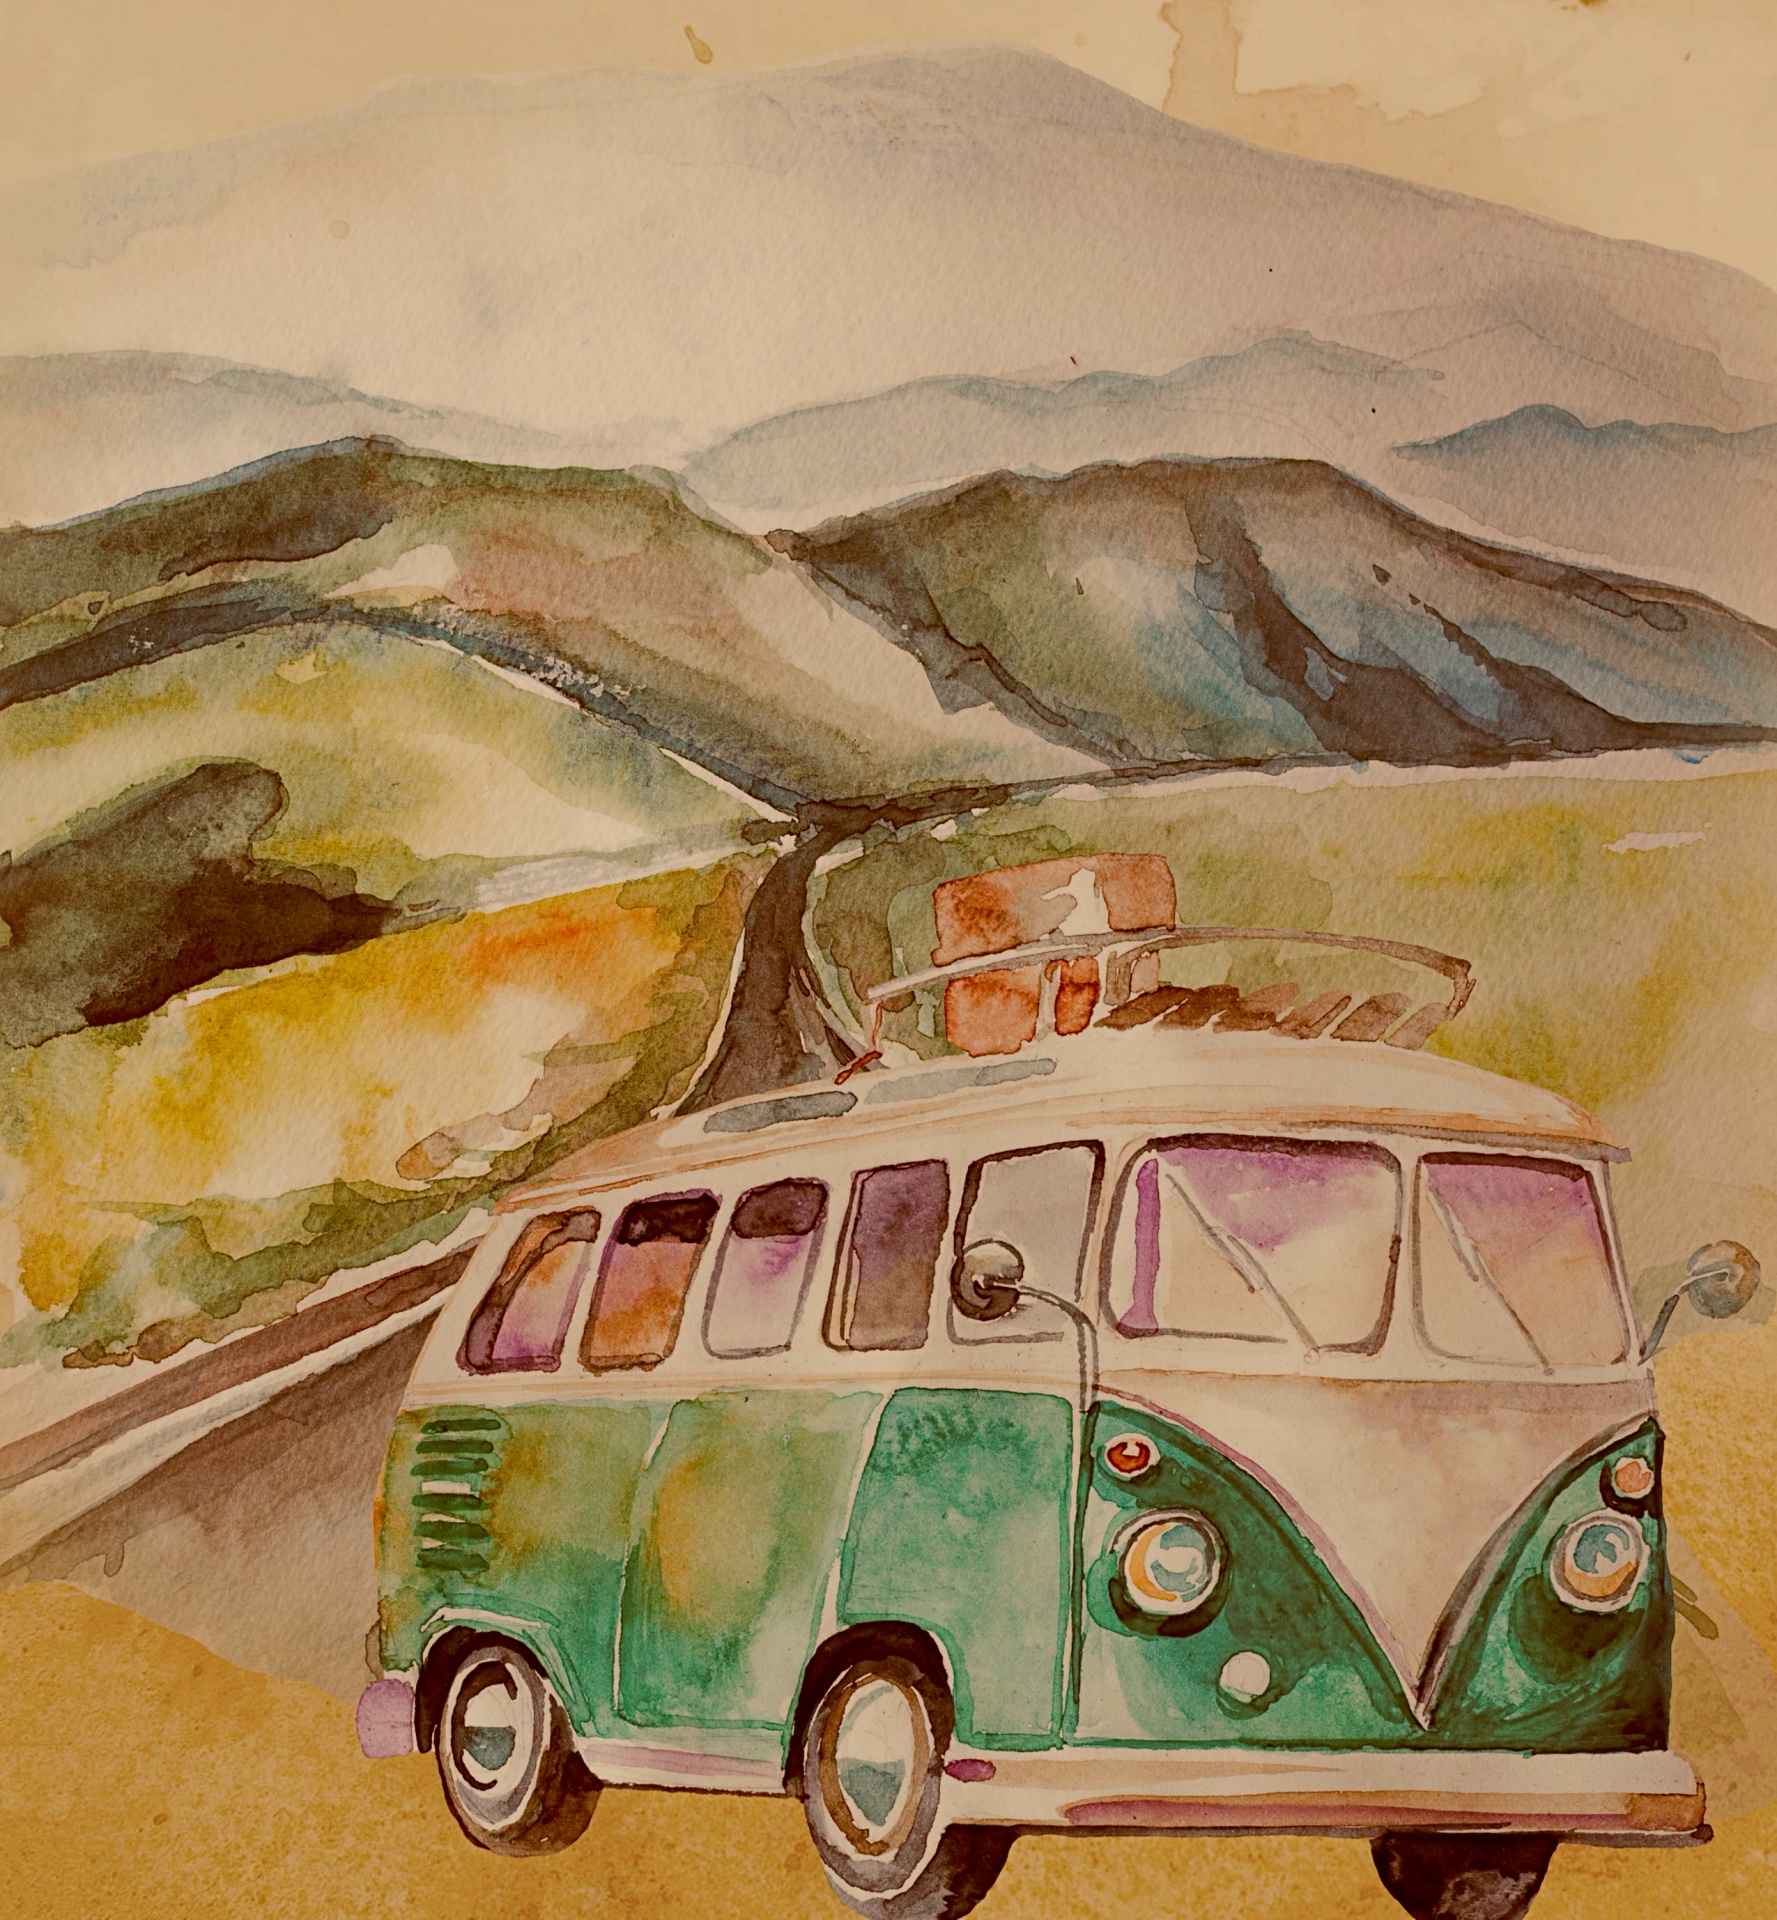 Cartel de viaje de autobús VW vintage